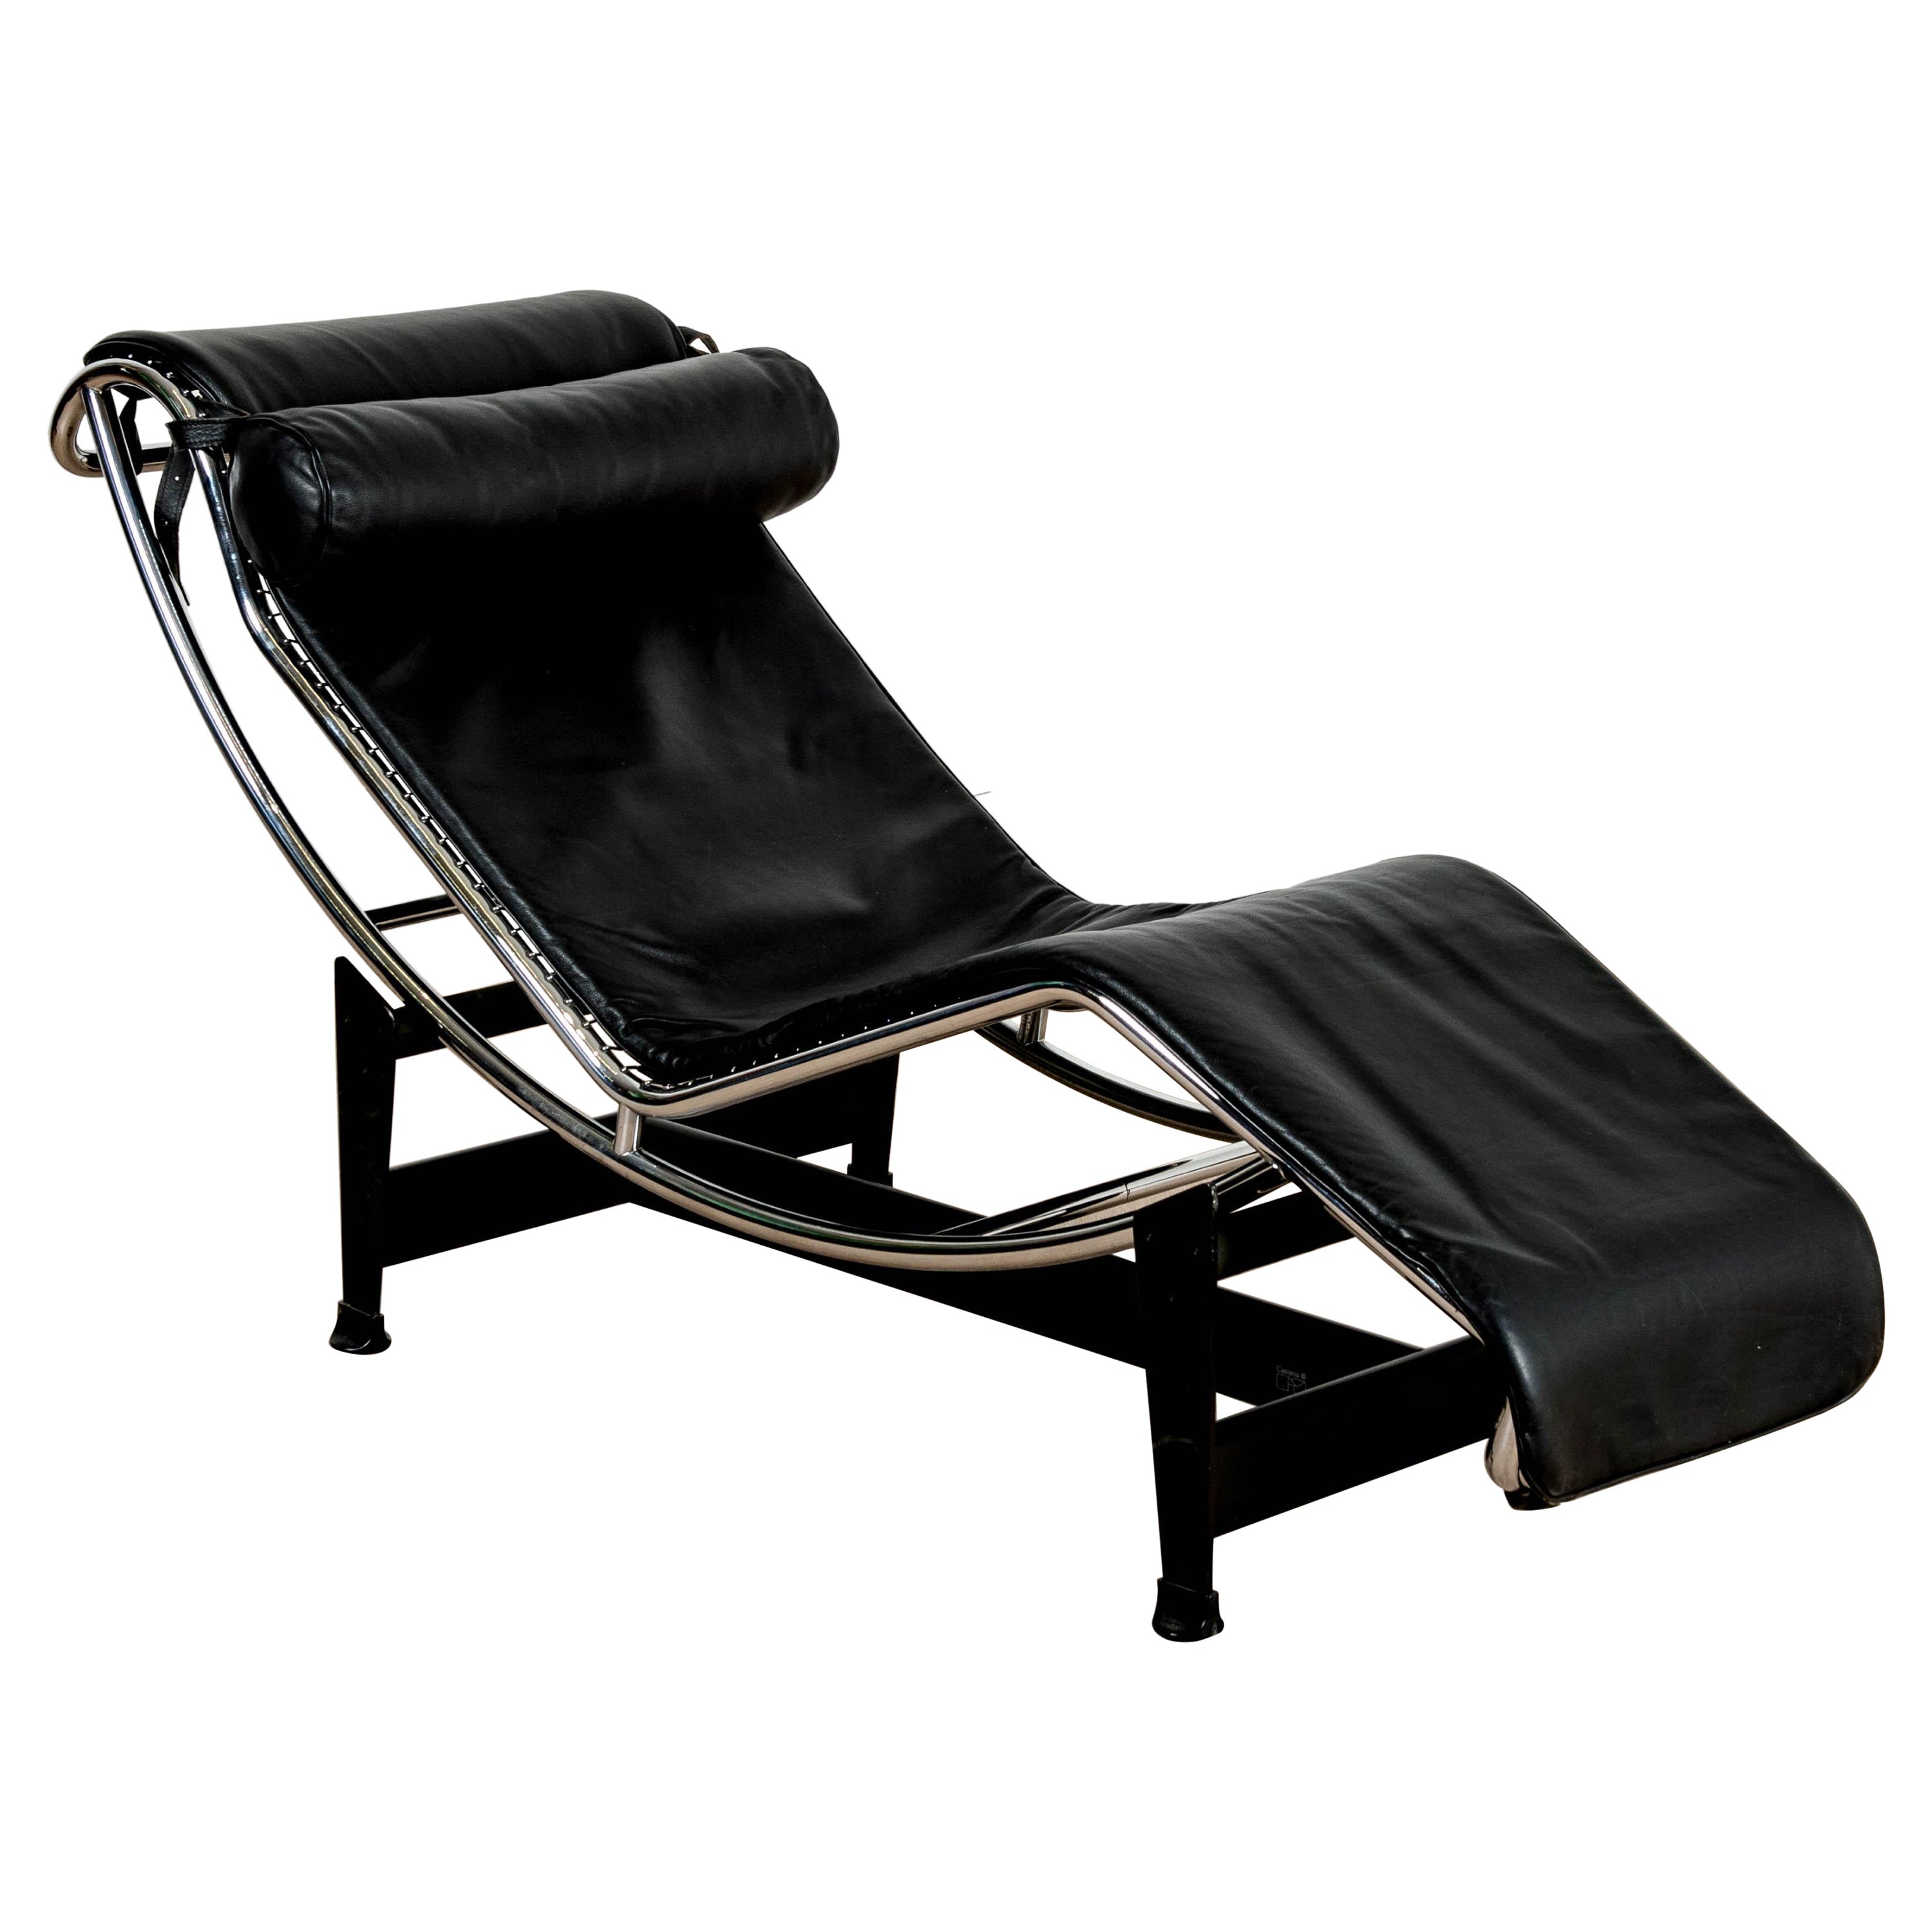 Chaise longue "LC4", Le Corbusier, Pierre Jeanneret, Charlotte Perriand, éditons